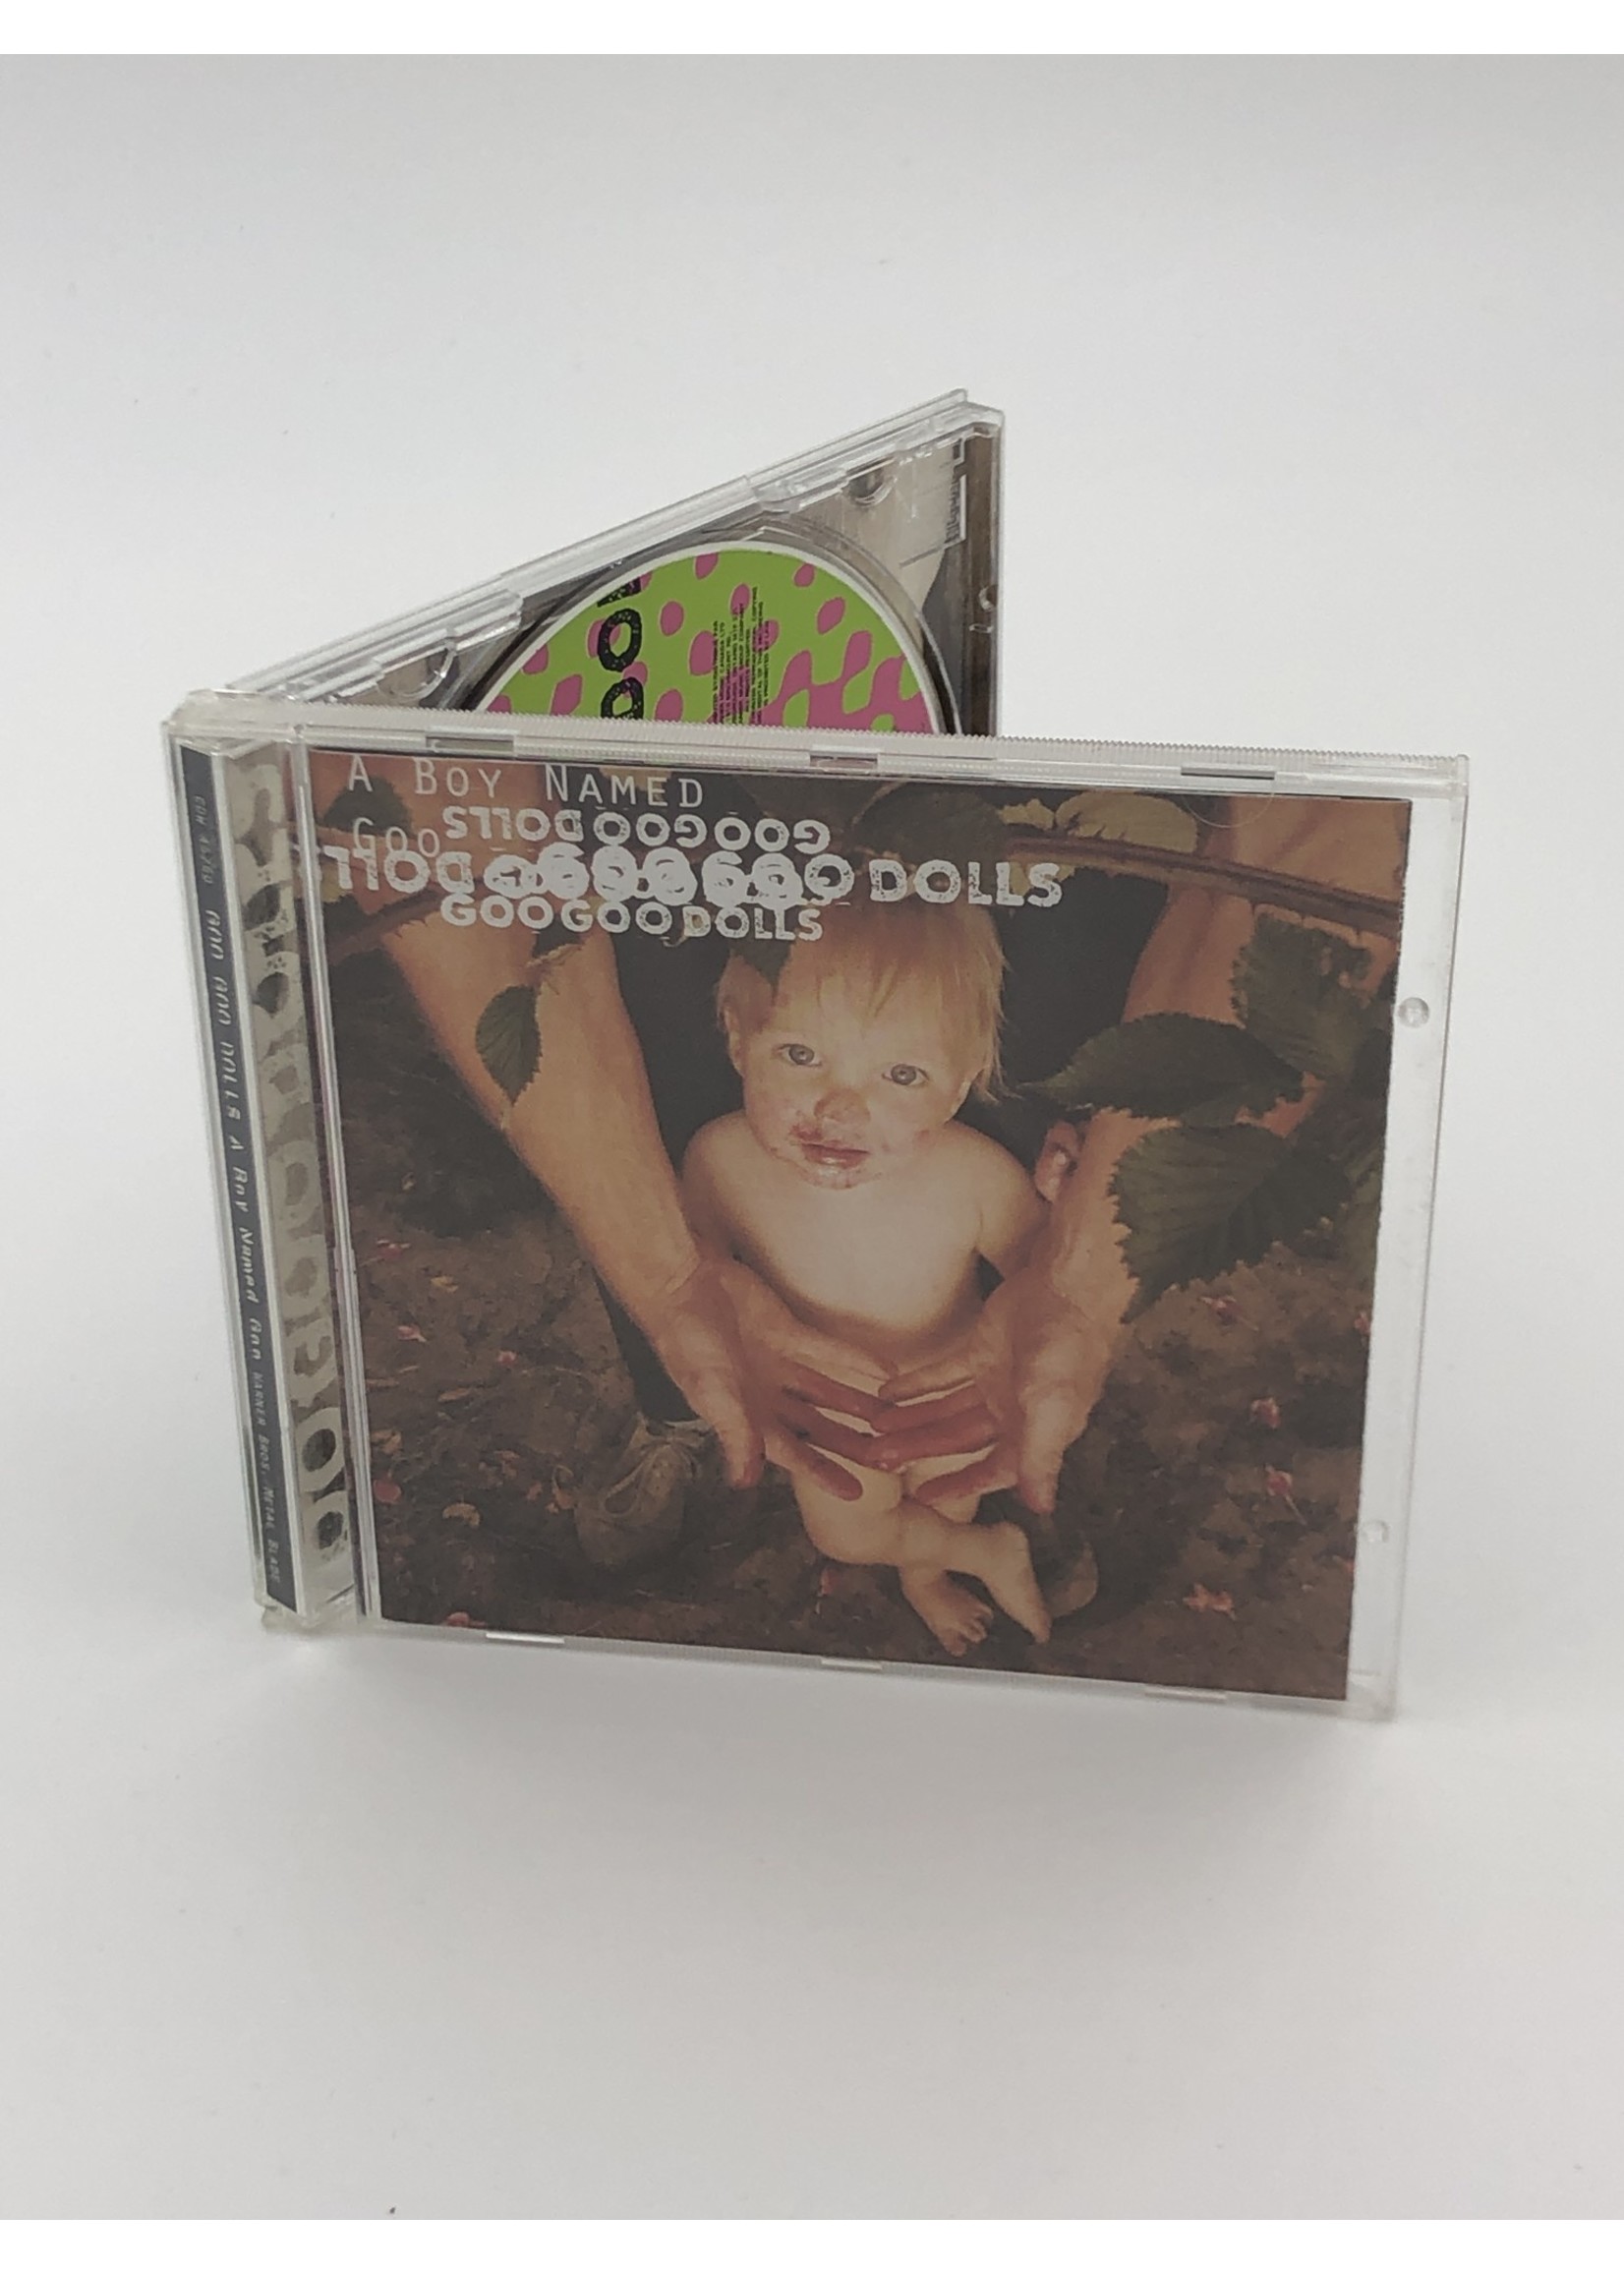 CD Goo Goo Dolls: A Boy Named Goo CD